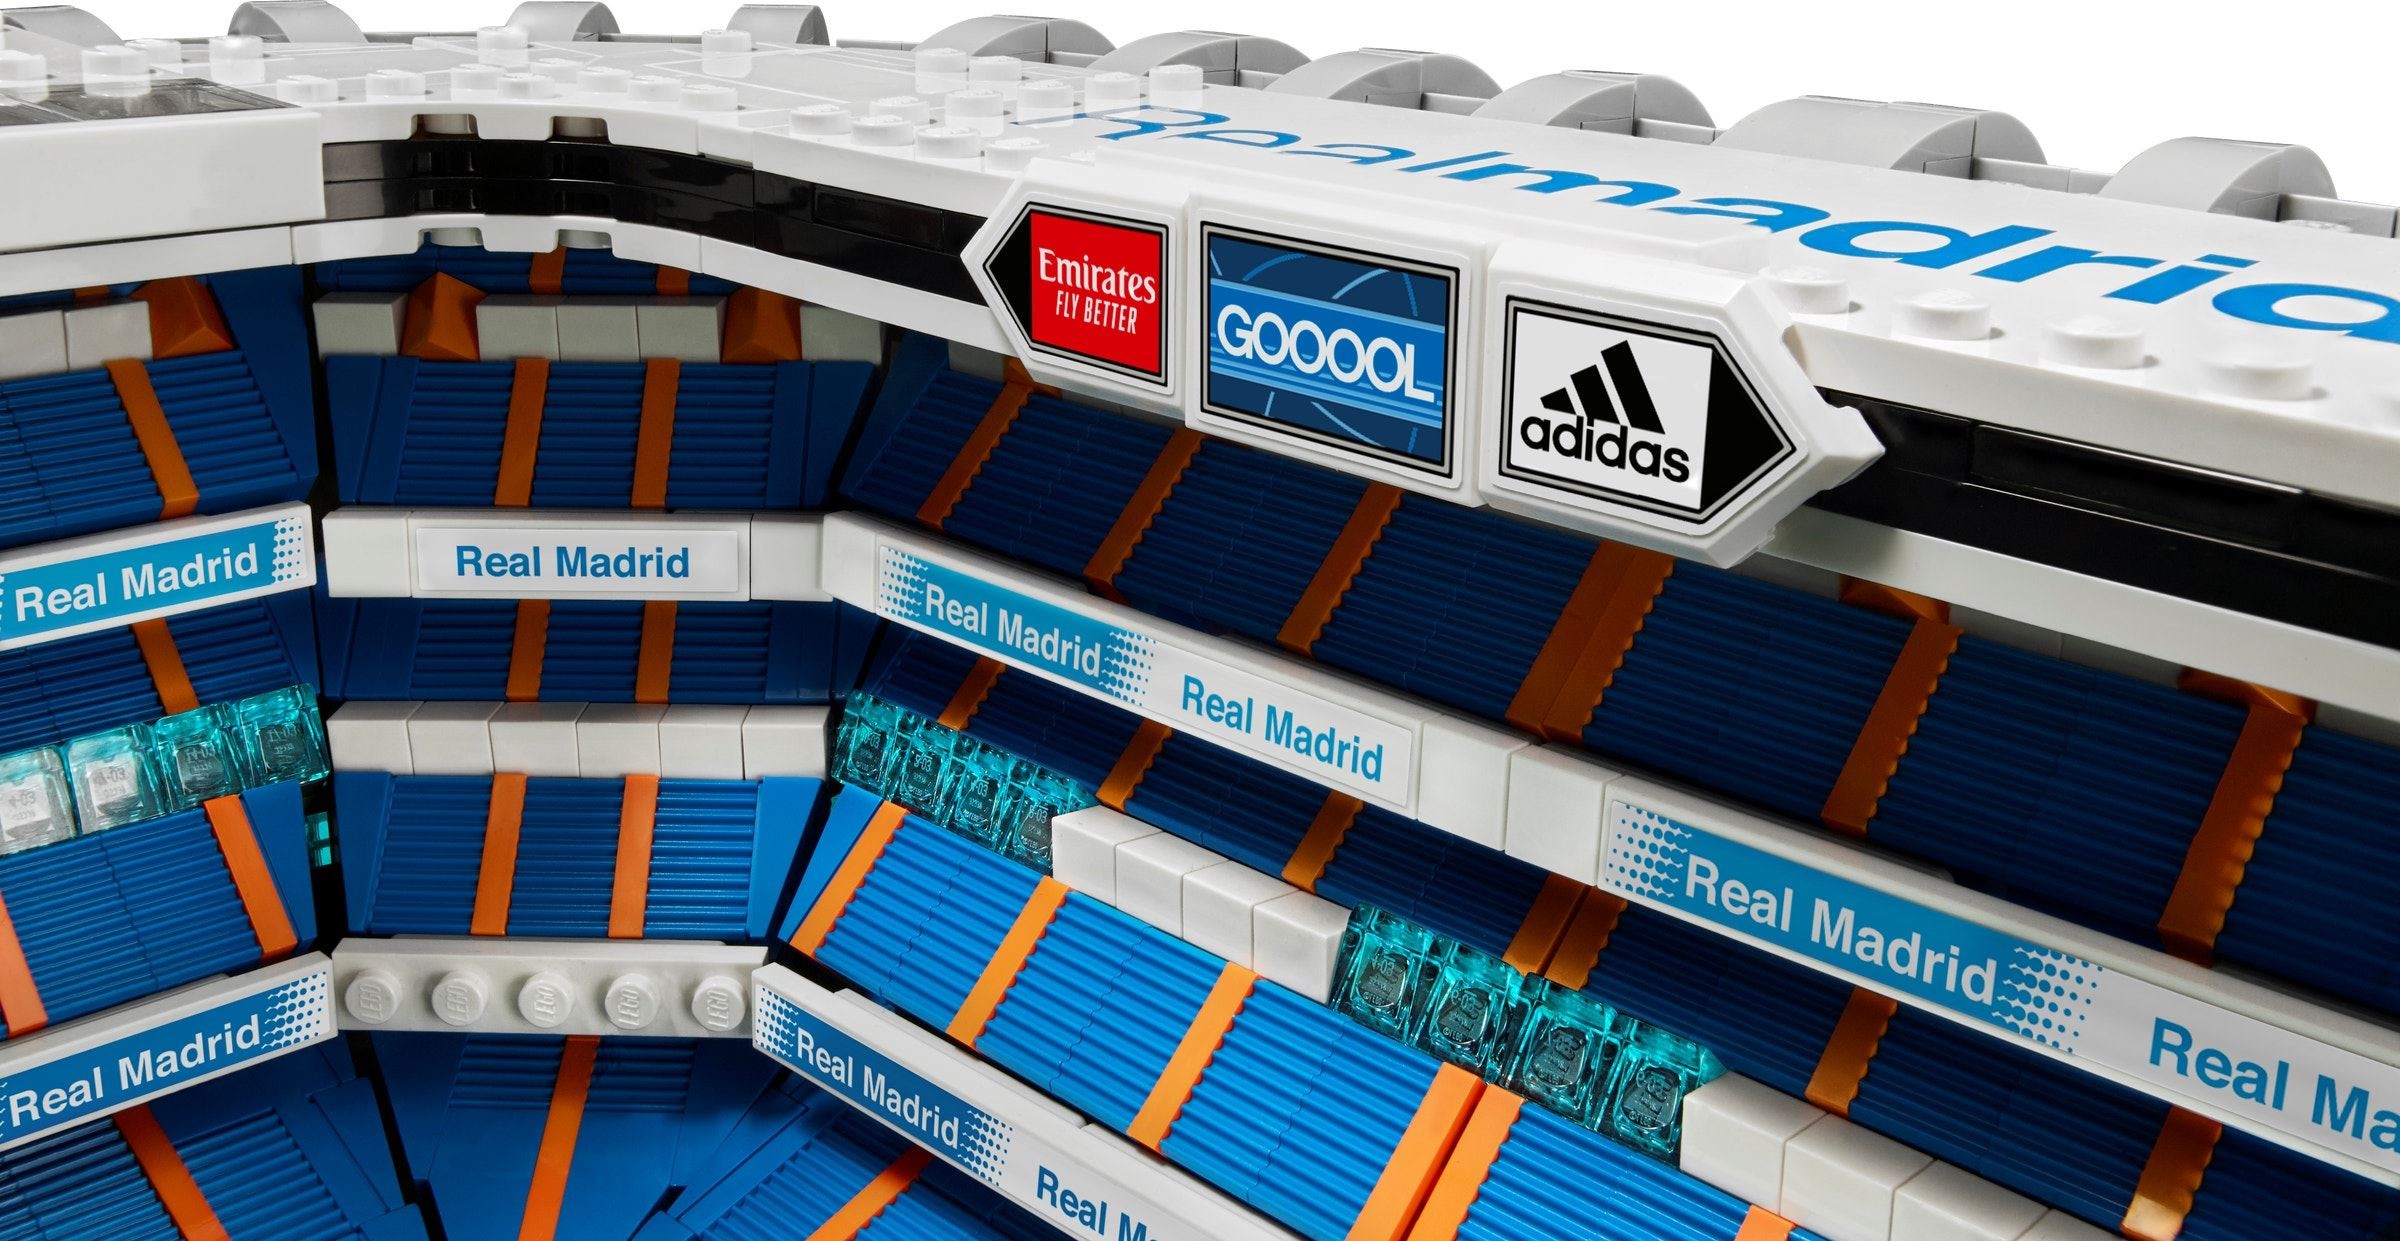 LEGO Real Madrid Santiago Bernabéu Stadium (10299) BRAND NEW & SEALED